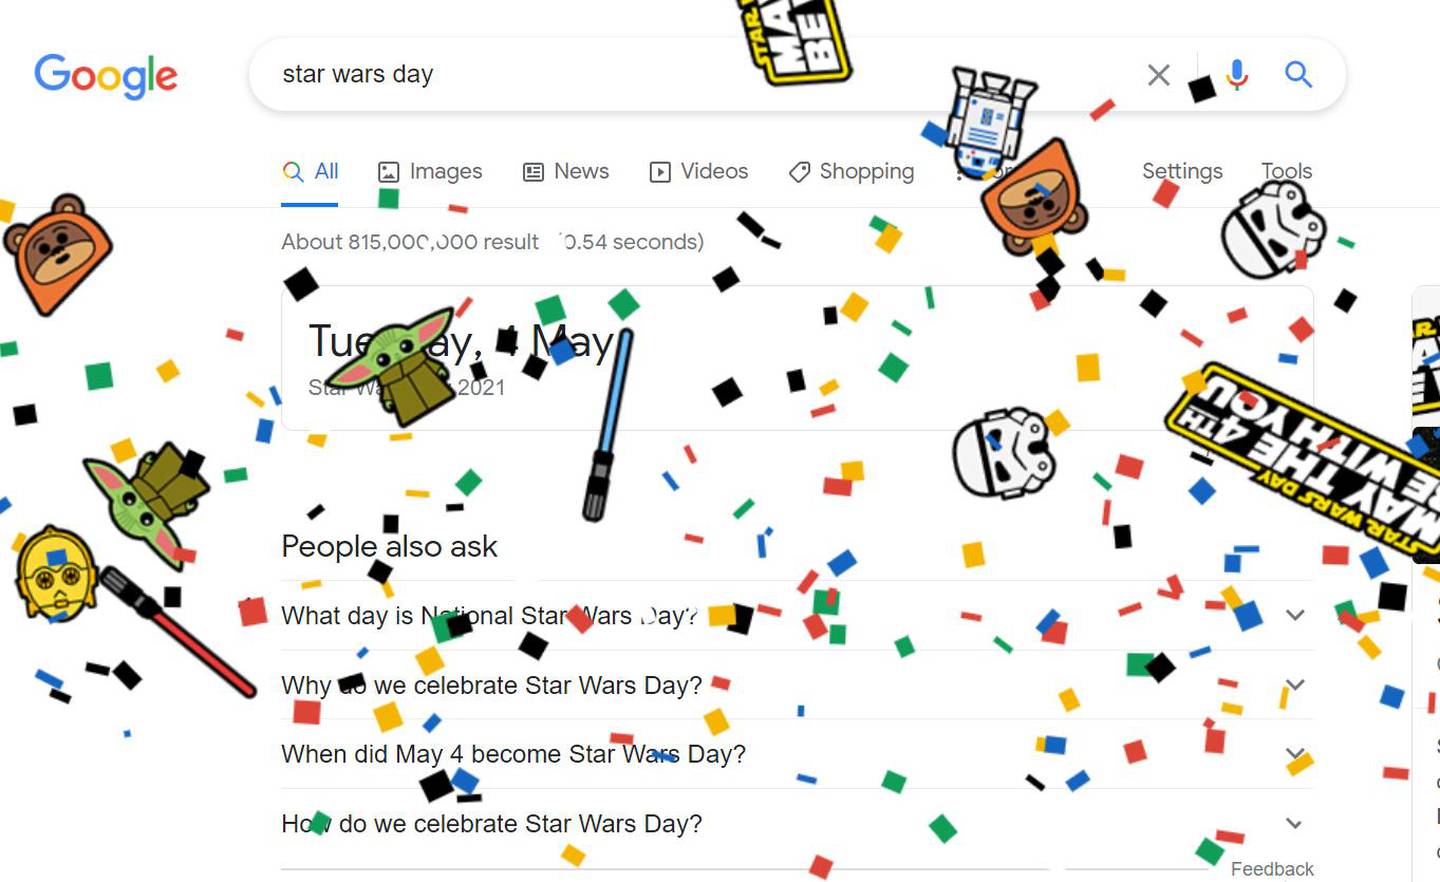 Google celebrates Star Wars Day with themed virtual confetti. Courtesy Google